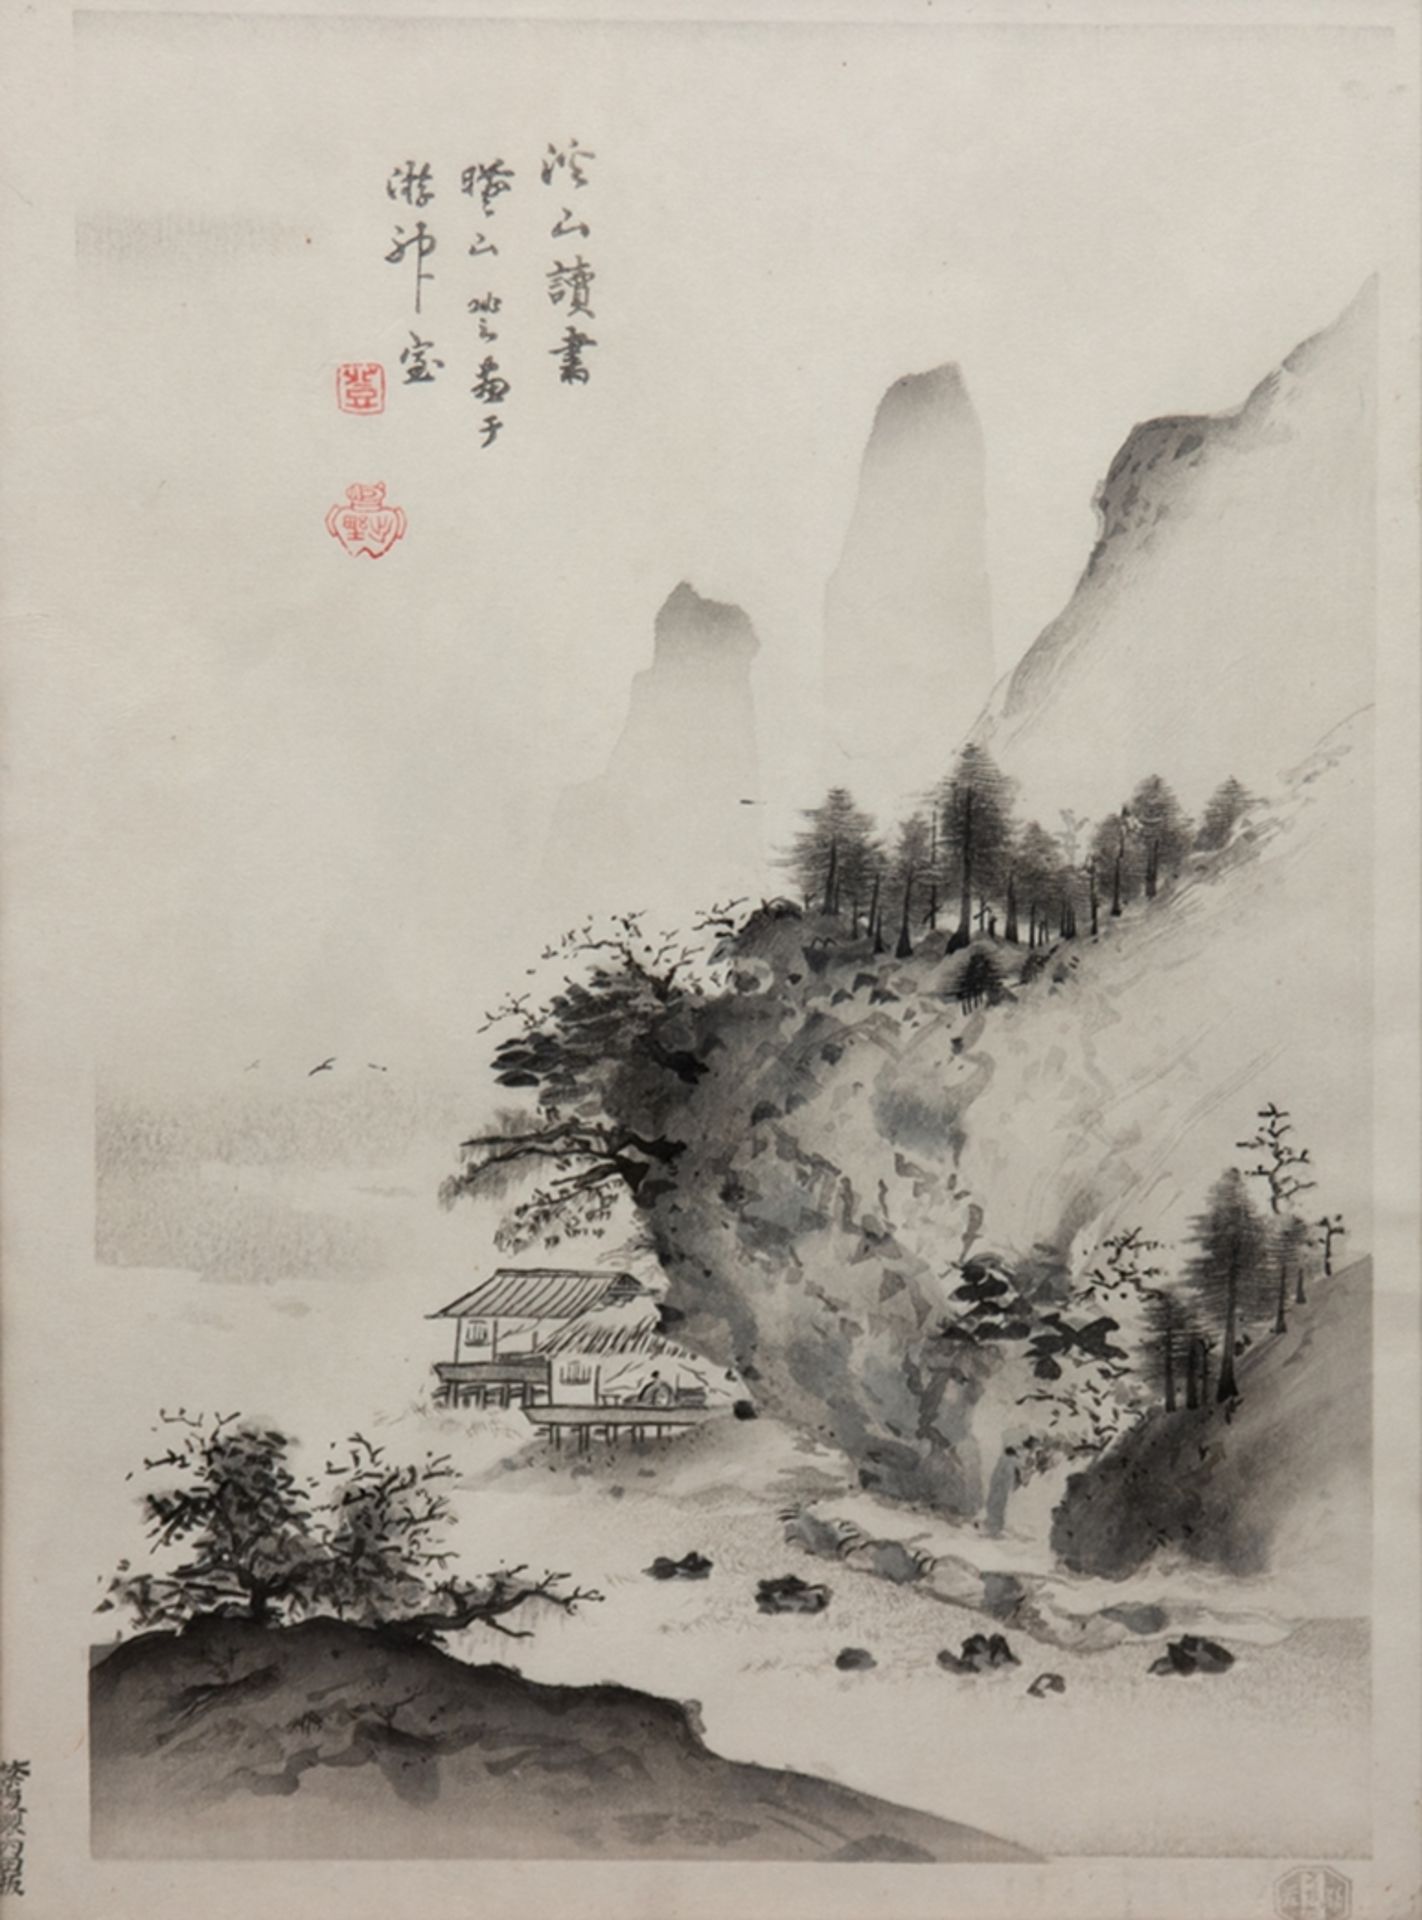 Gizan, Izuno (1885-1957 Kyoto) "Gebirgslandschaft", Holzschnitt mit Stempelsignatur, 42,5x29,5 cm, 